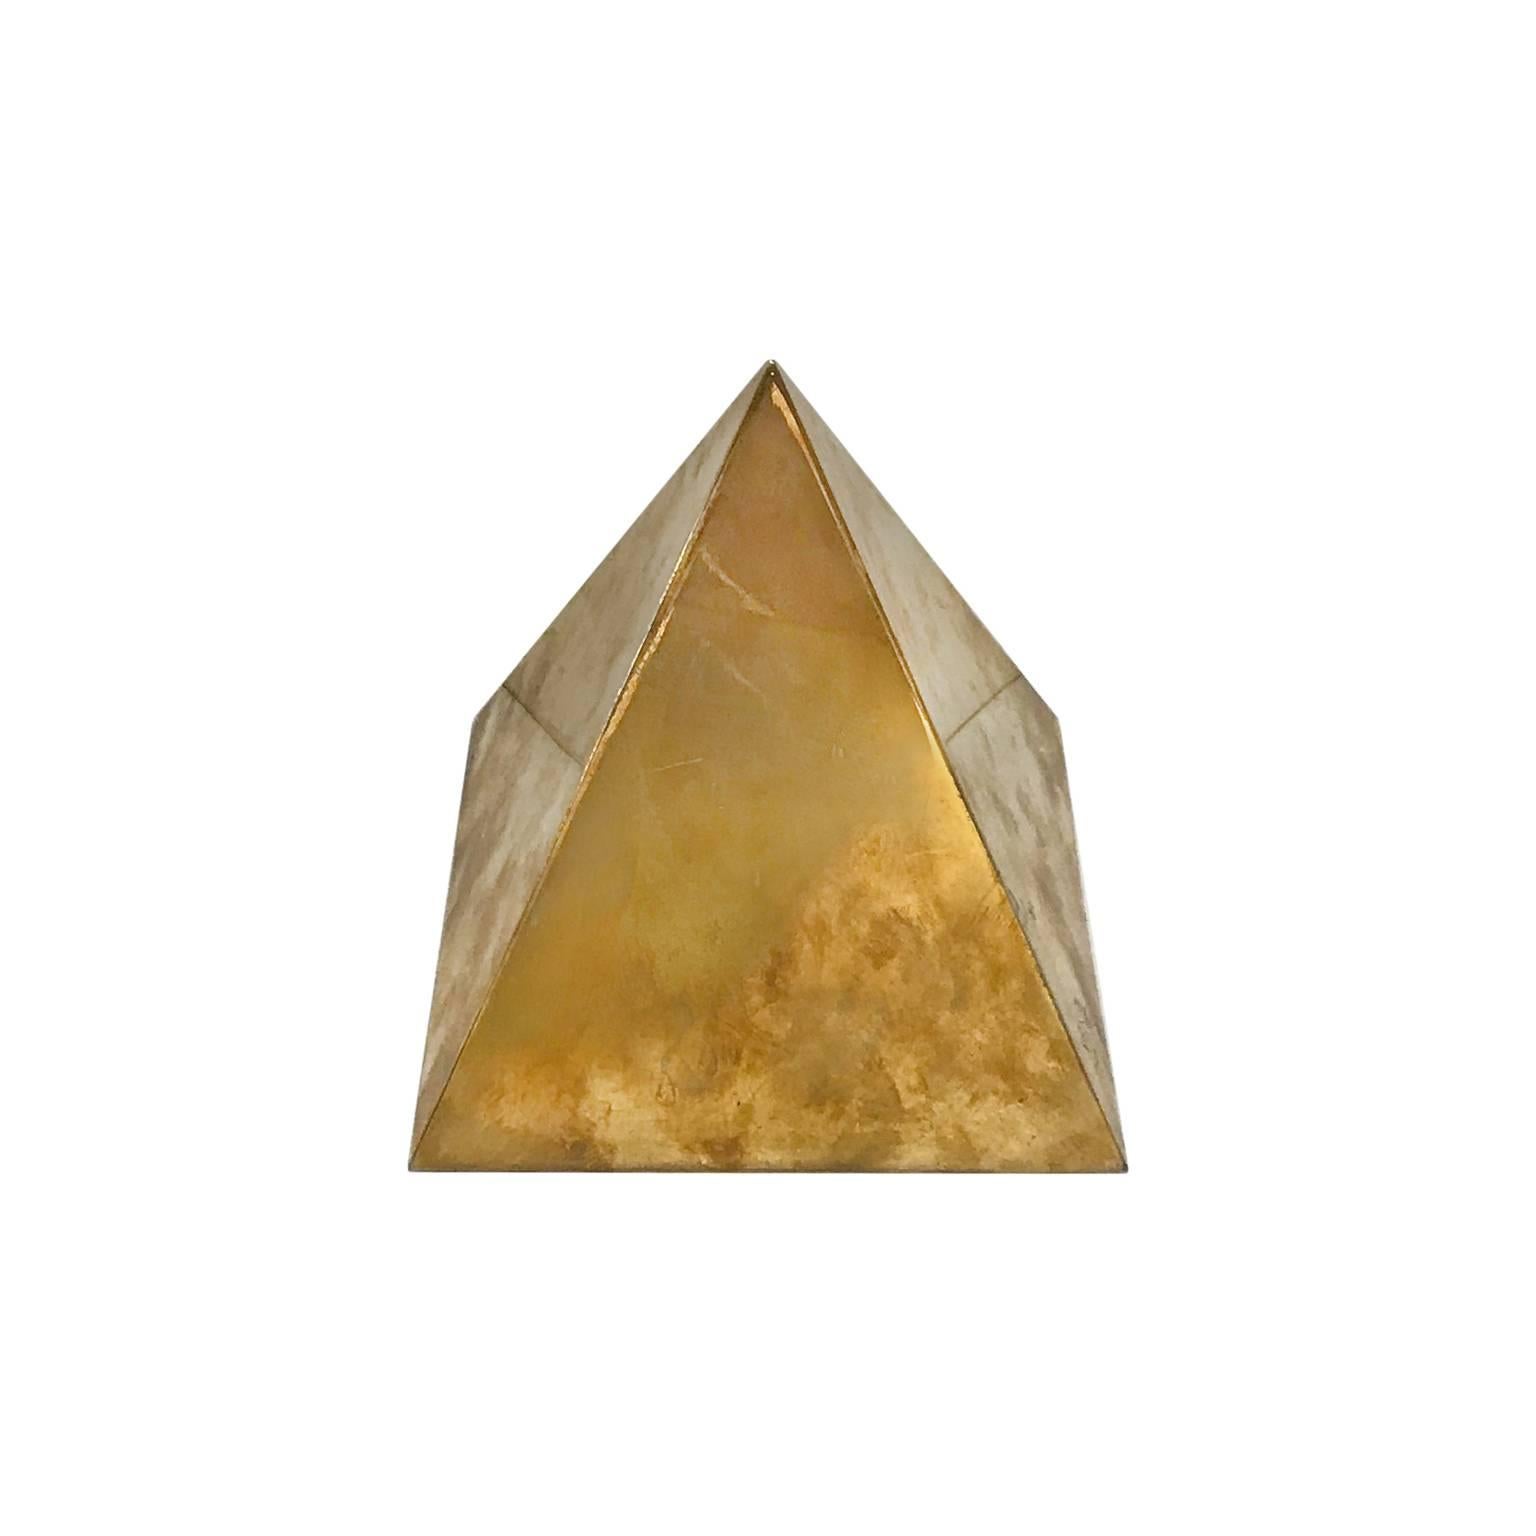 1970s Small Decorative Brass Pyramid by Sarried Ltd